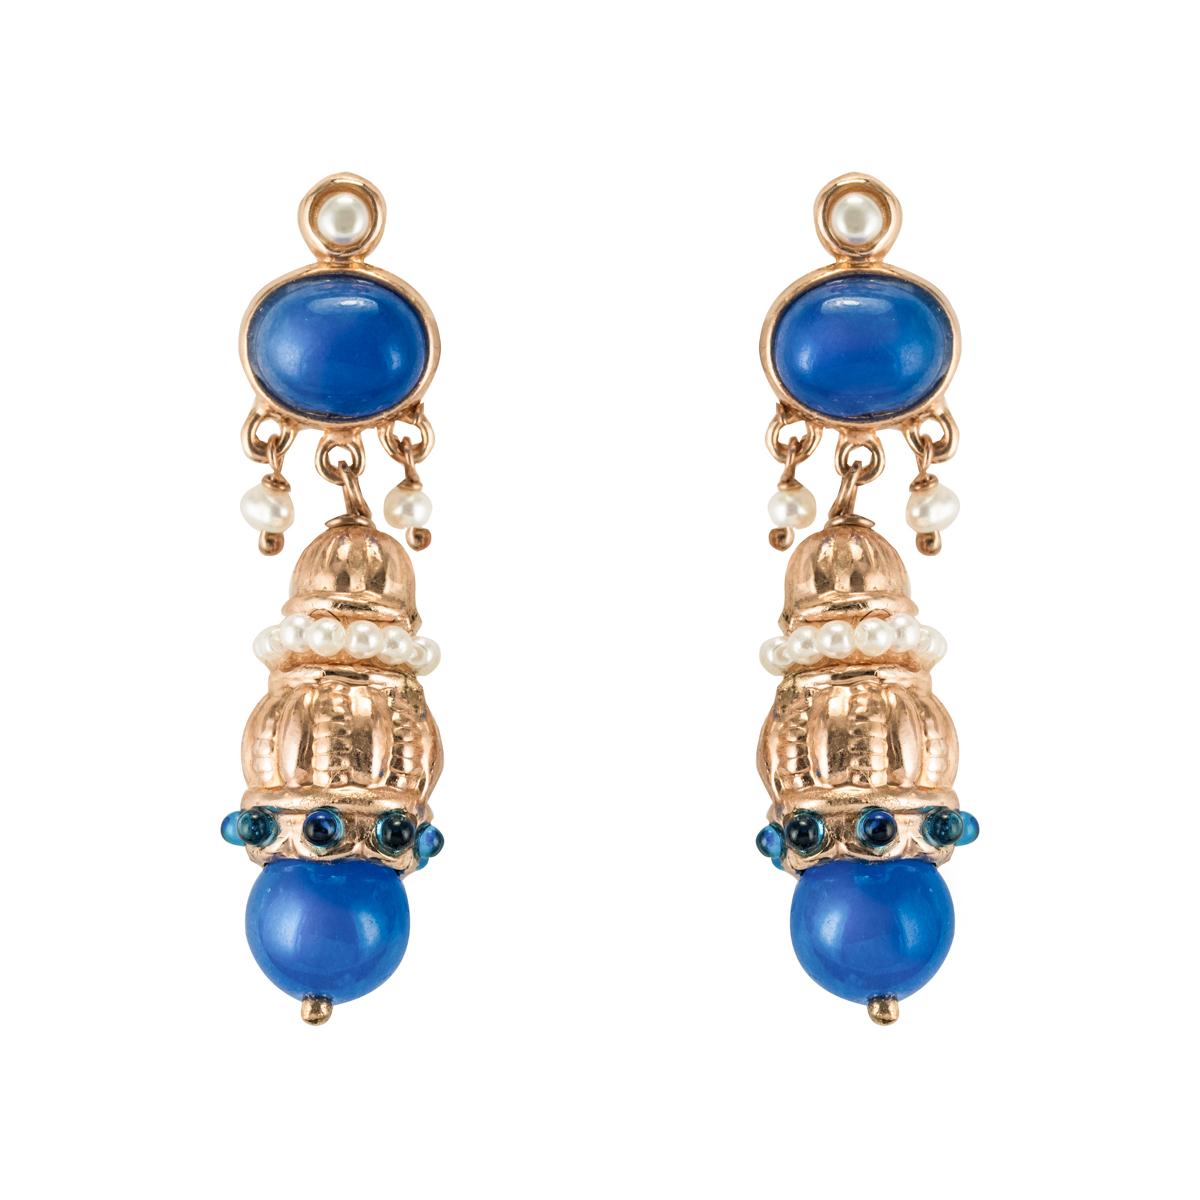 Antique Style Blue Stone Pearl Pendant Earrings